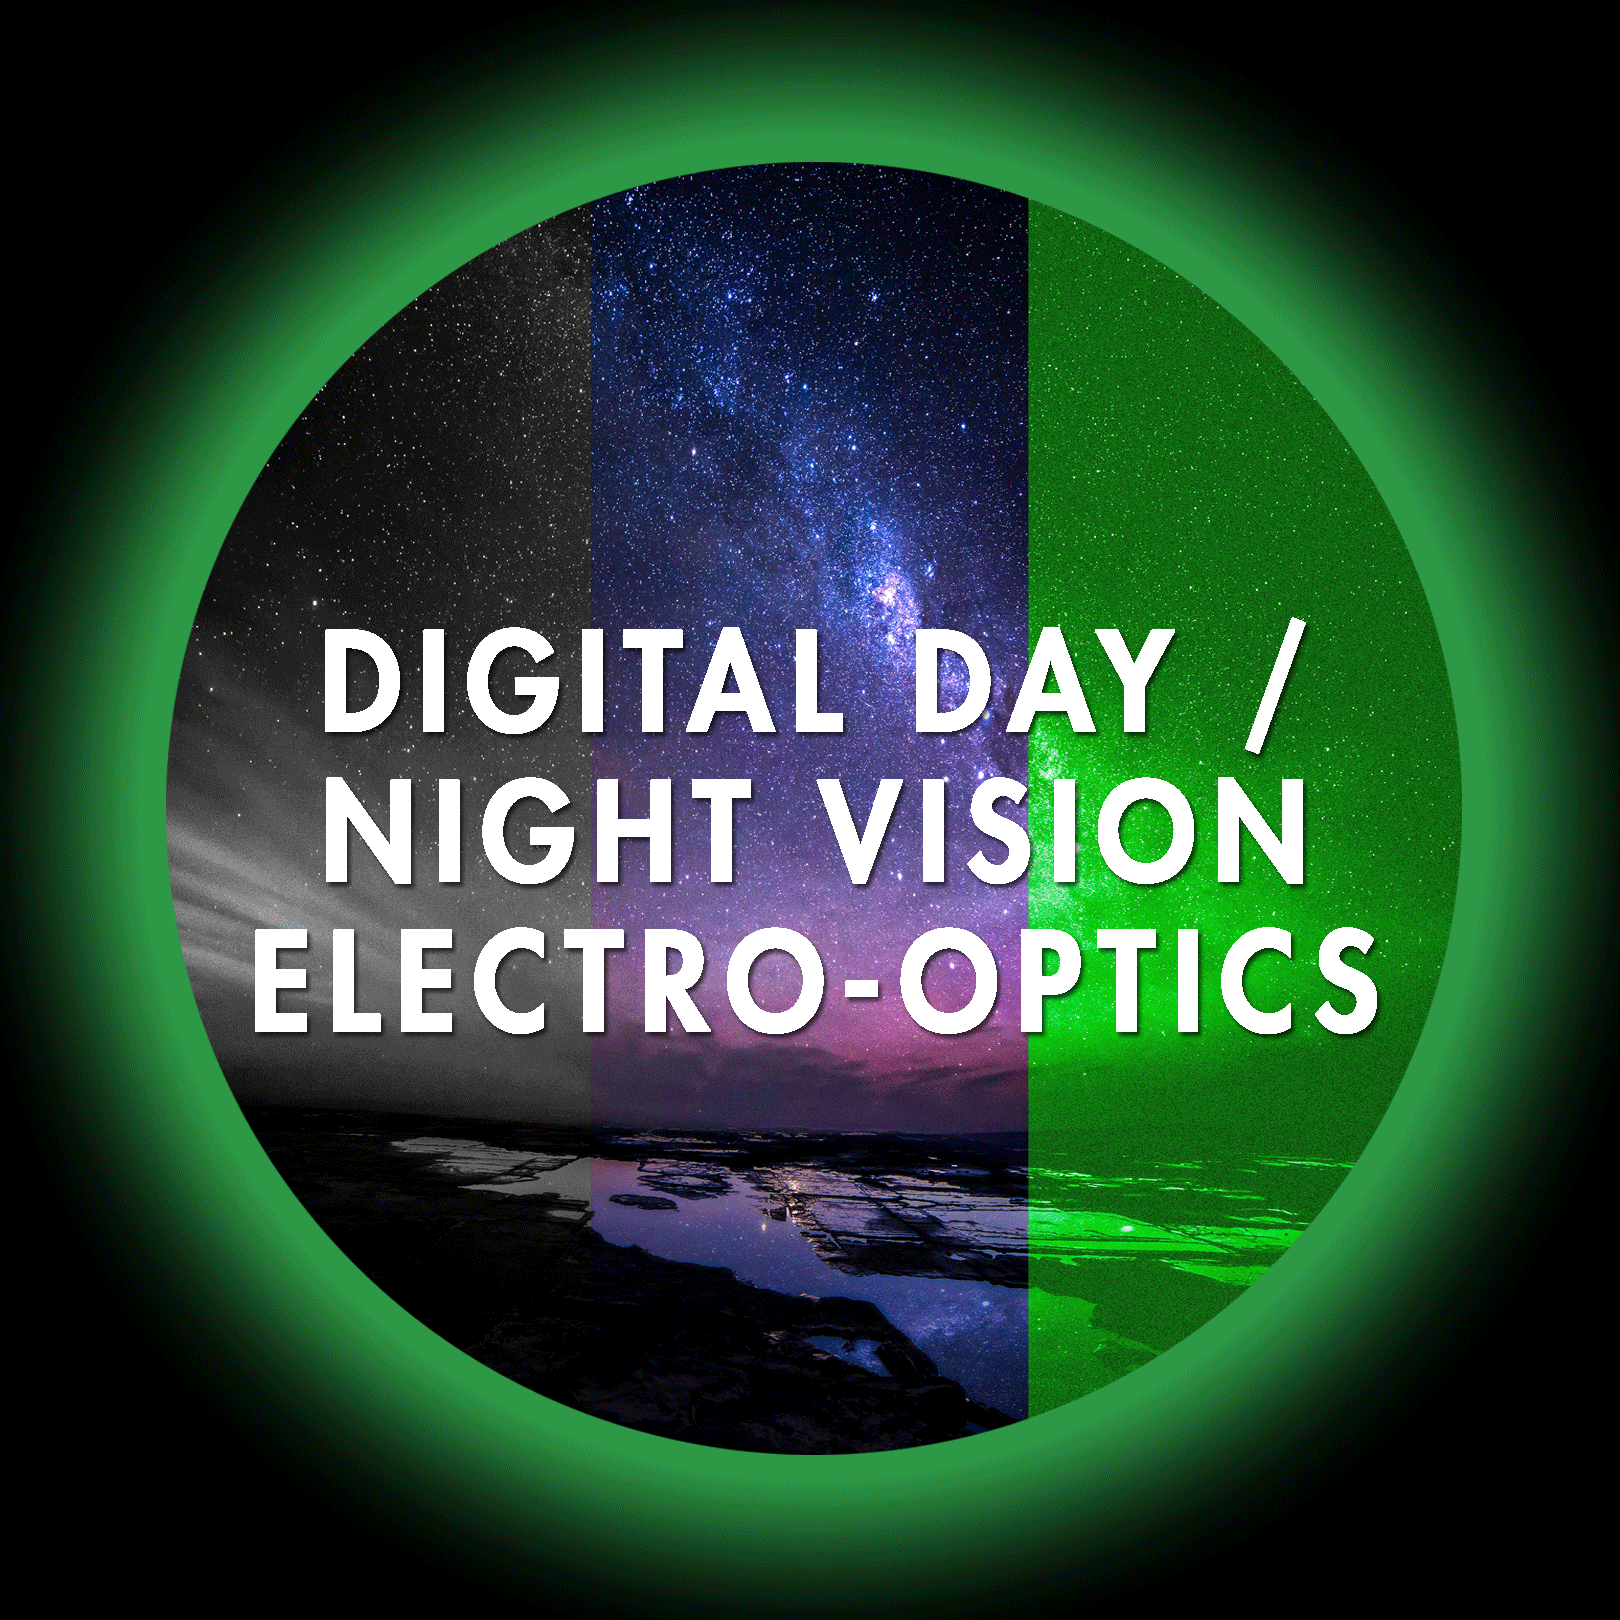 Digital Day Night Vision Electro-Optics